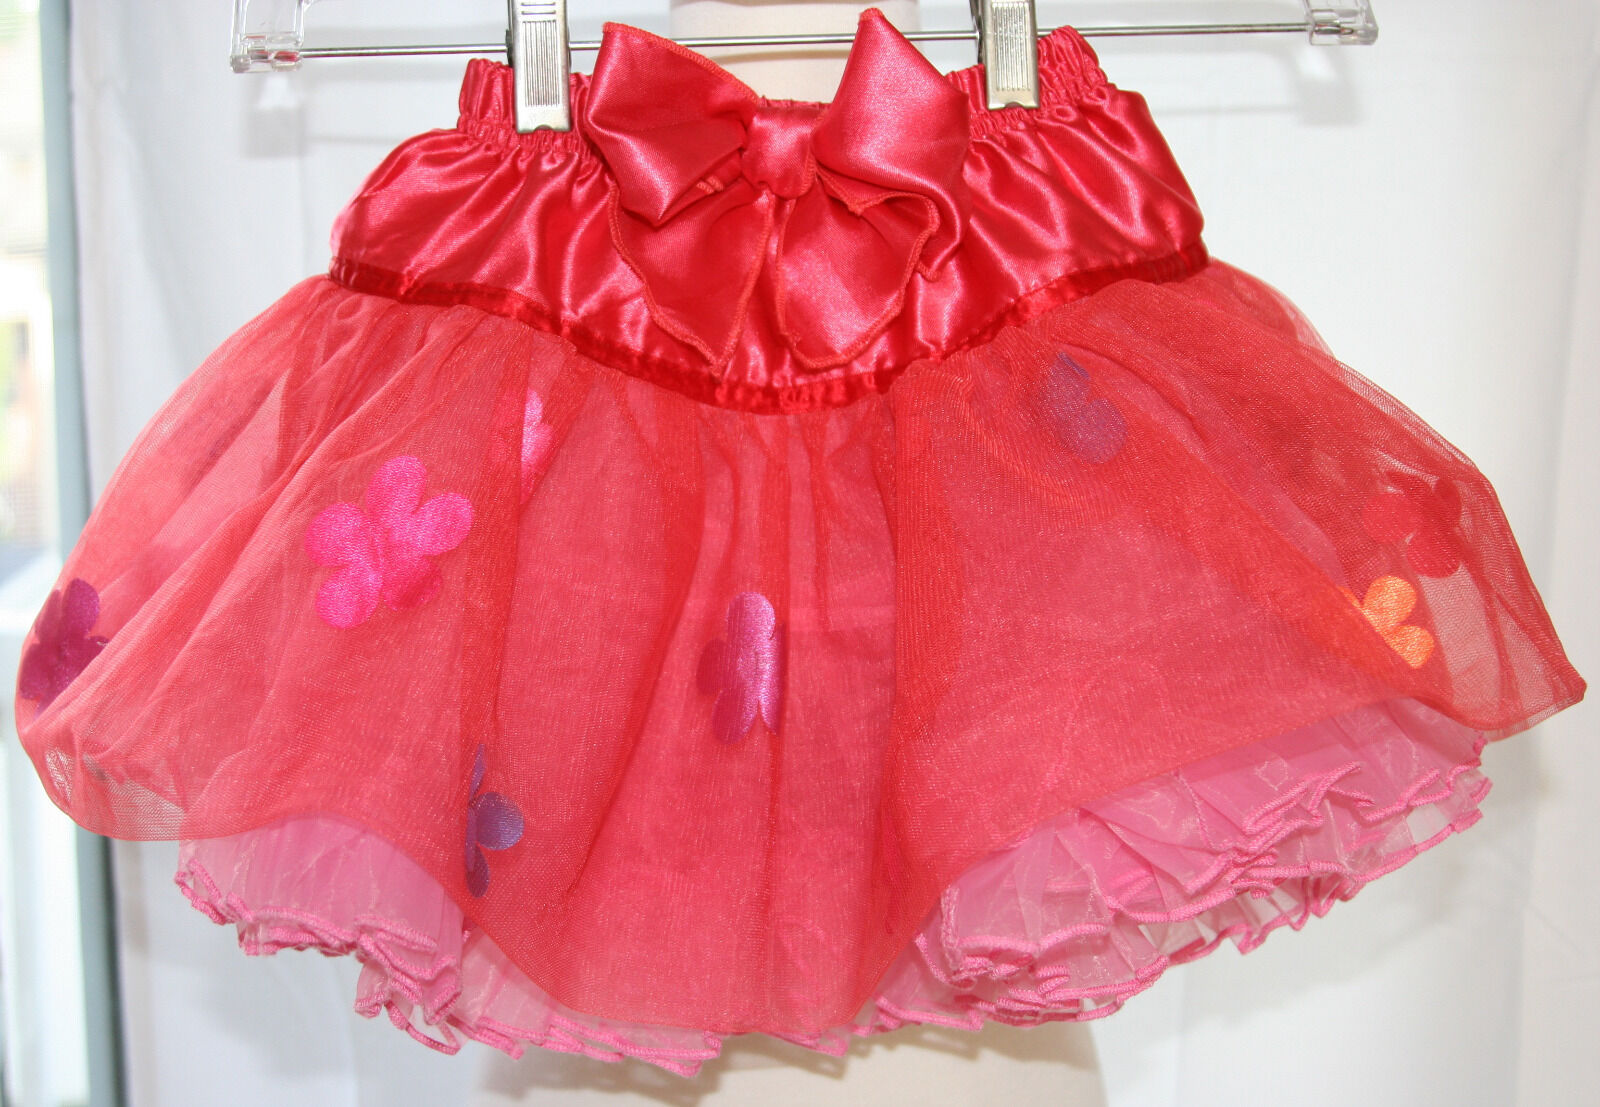 H&M Valeria Red Tulle Satin Floral Skirt Rufffled Girls Size US 2-6 yrs EUC - $7.91